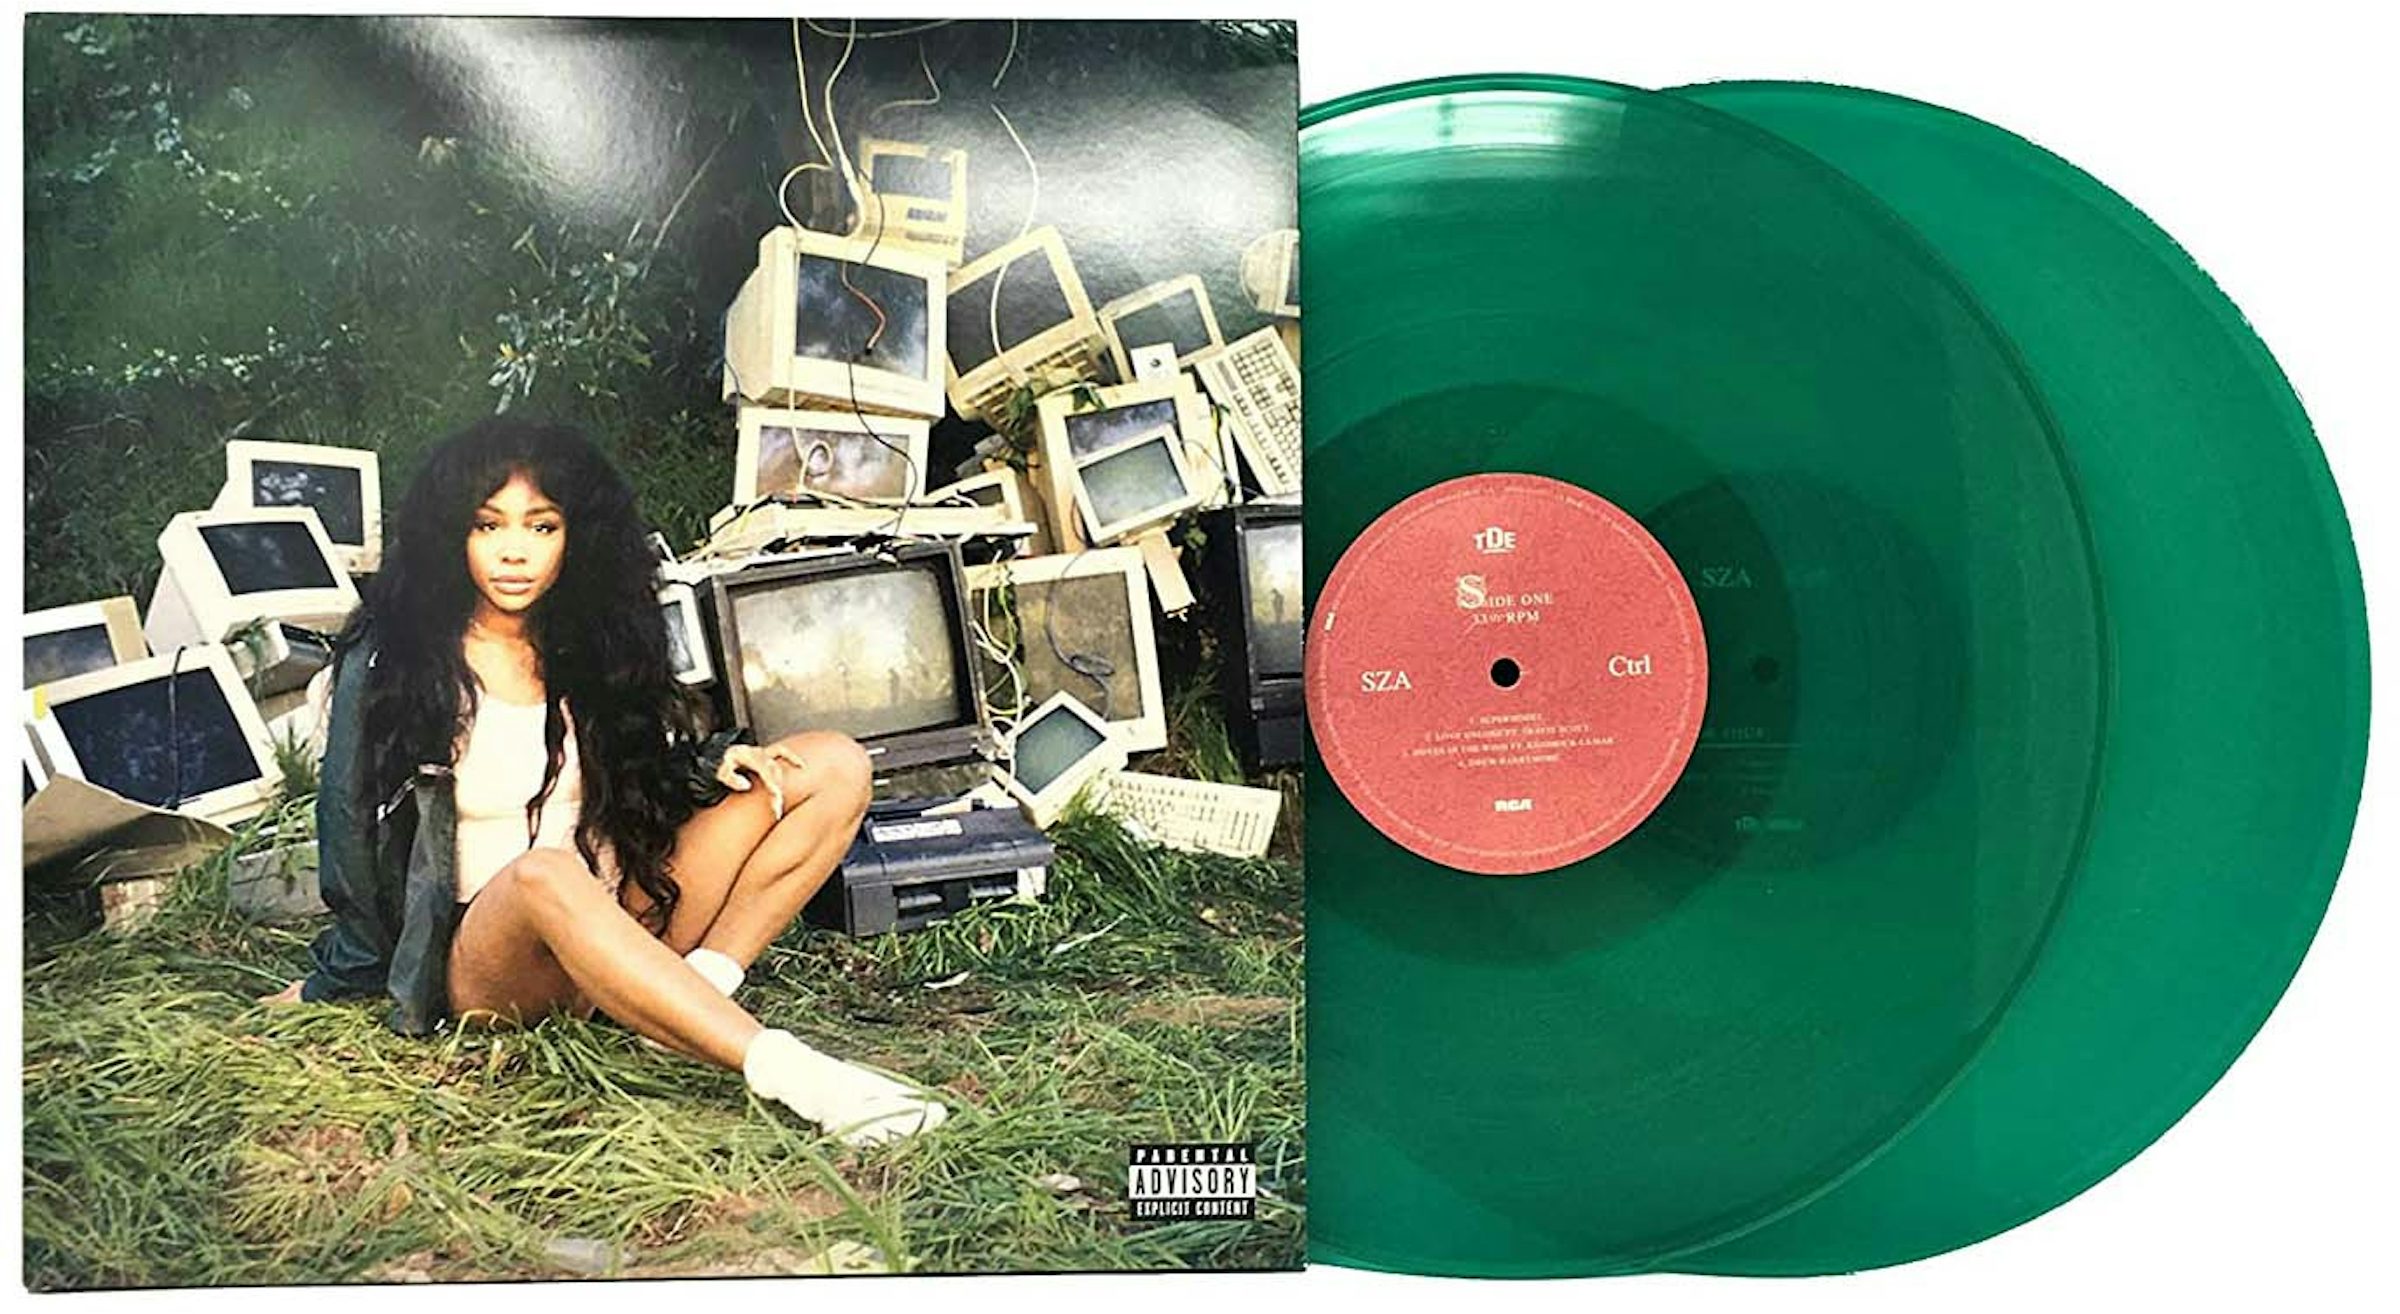 The Weeknd Starboy Limited Edition 2XLP Vinyl Translucent Blue